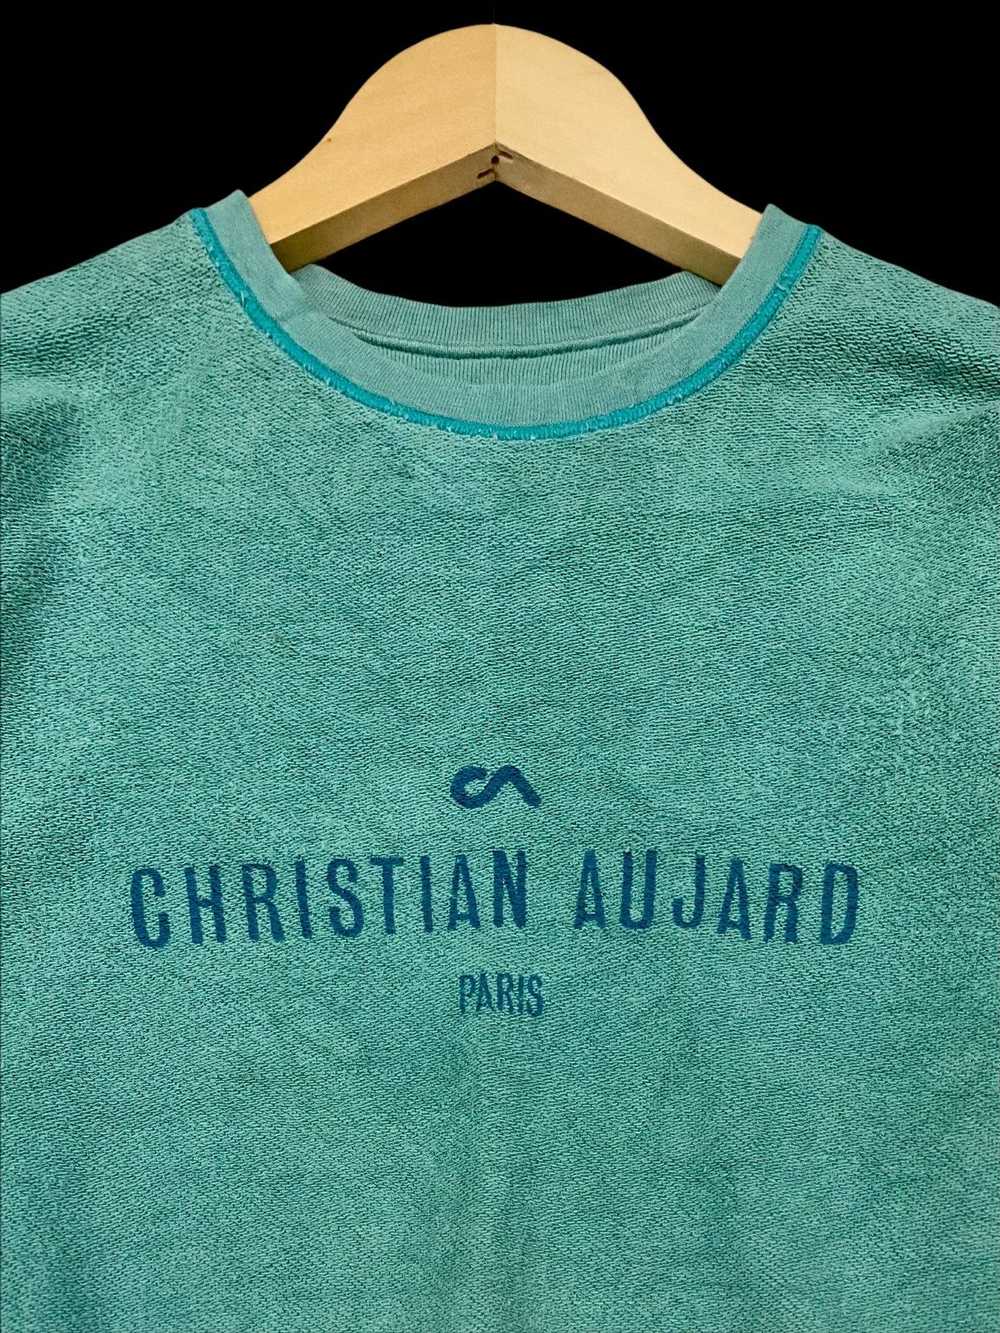 Brand × Other × Vintage VTG CHRISTIAN AUJARD PARI… - image 3